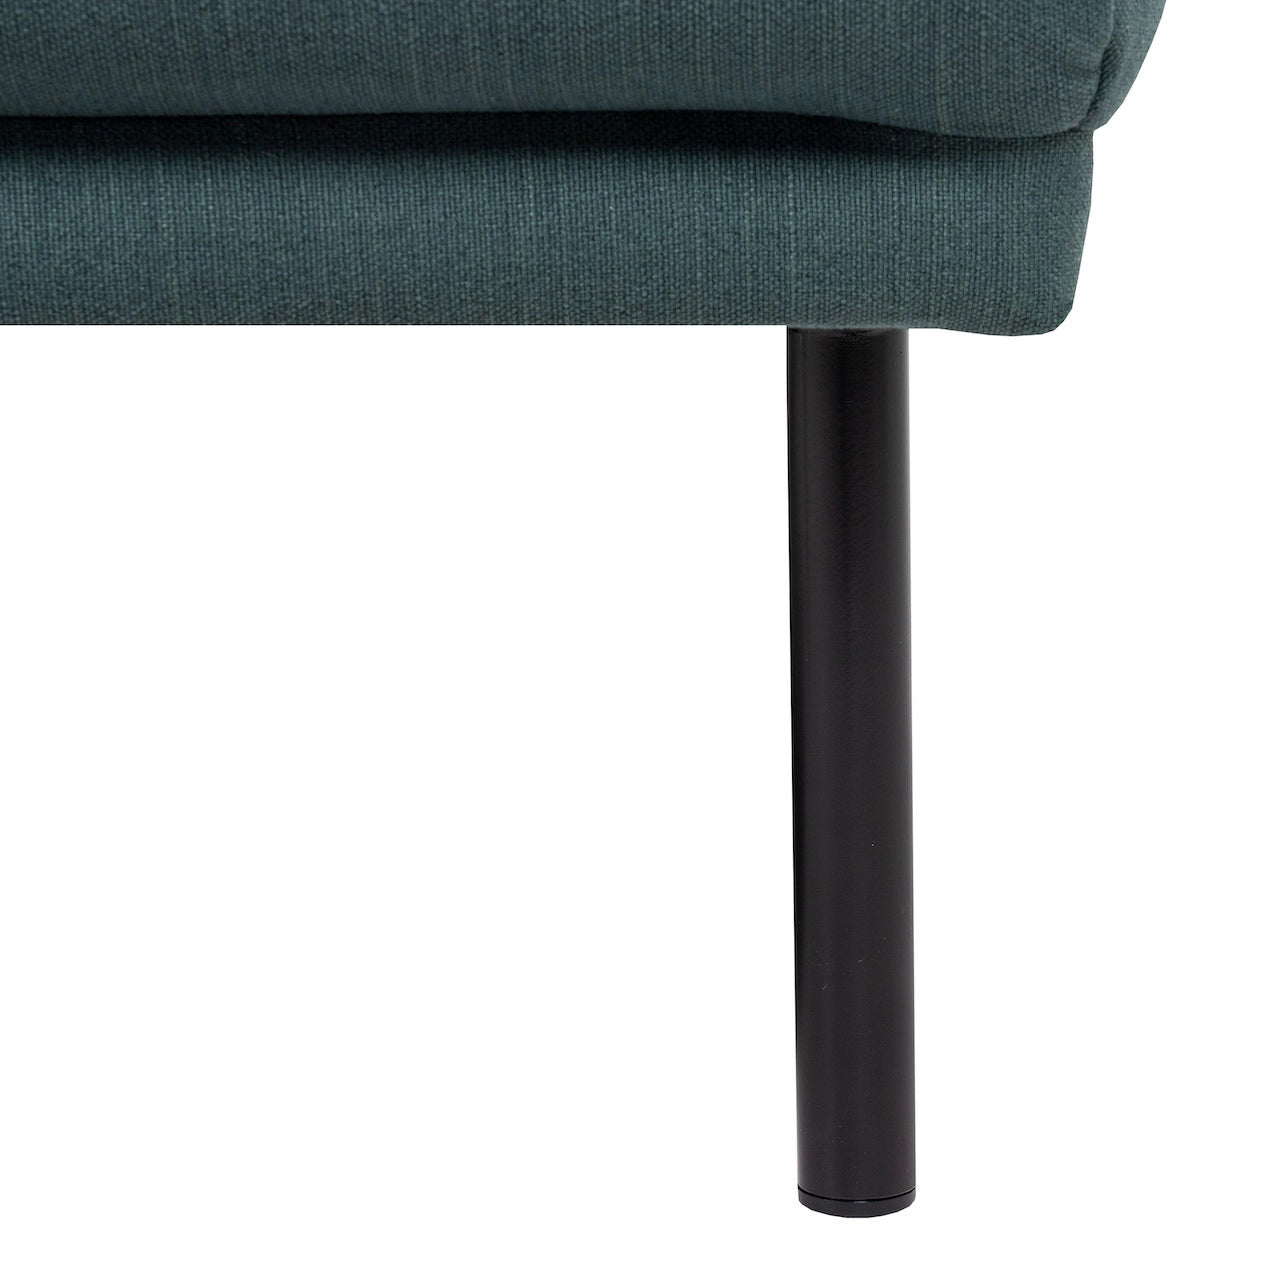 Furniture To Go Larvik Chaiselongue Sofa (LH) - Dark Green , Black Legs